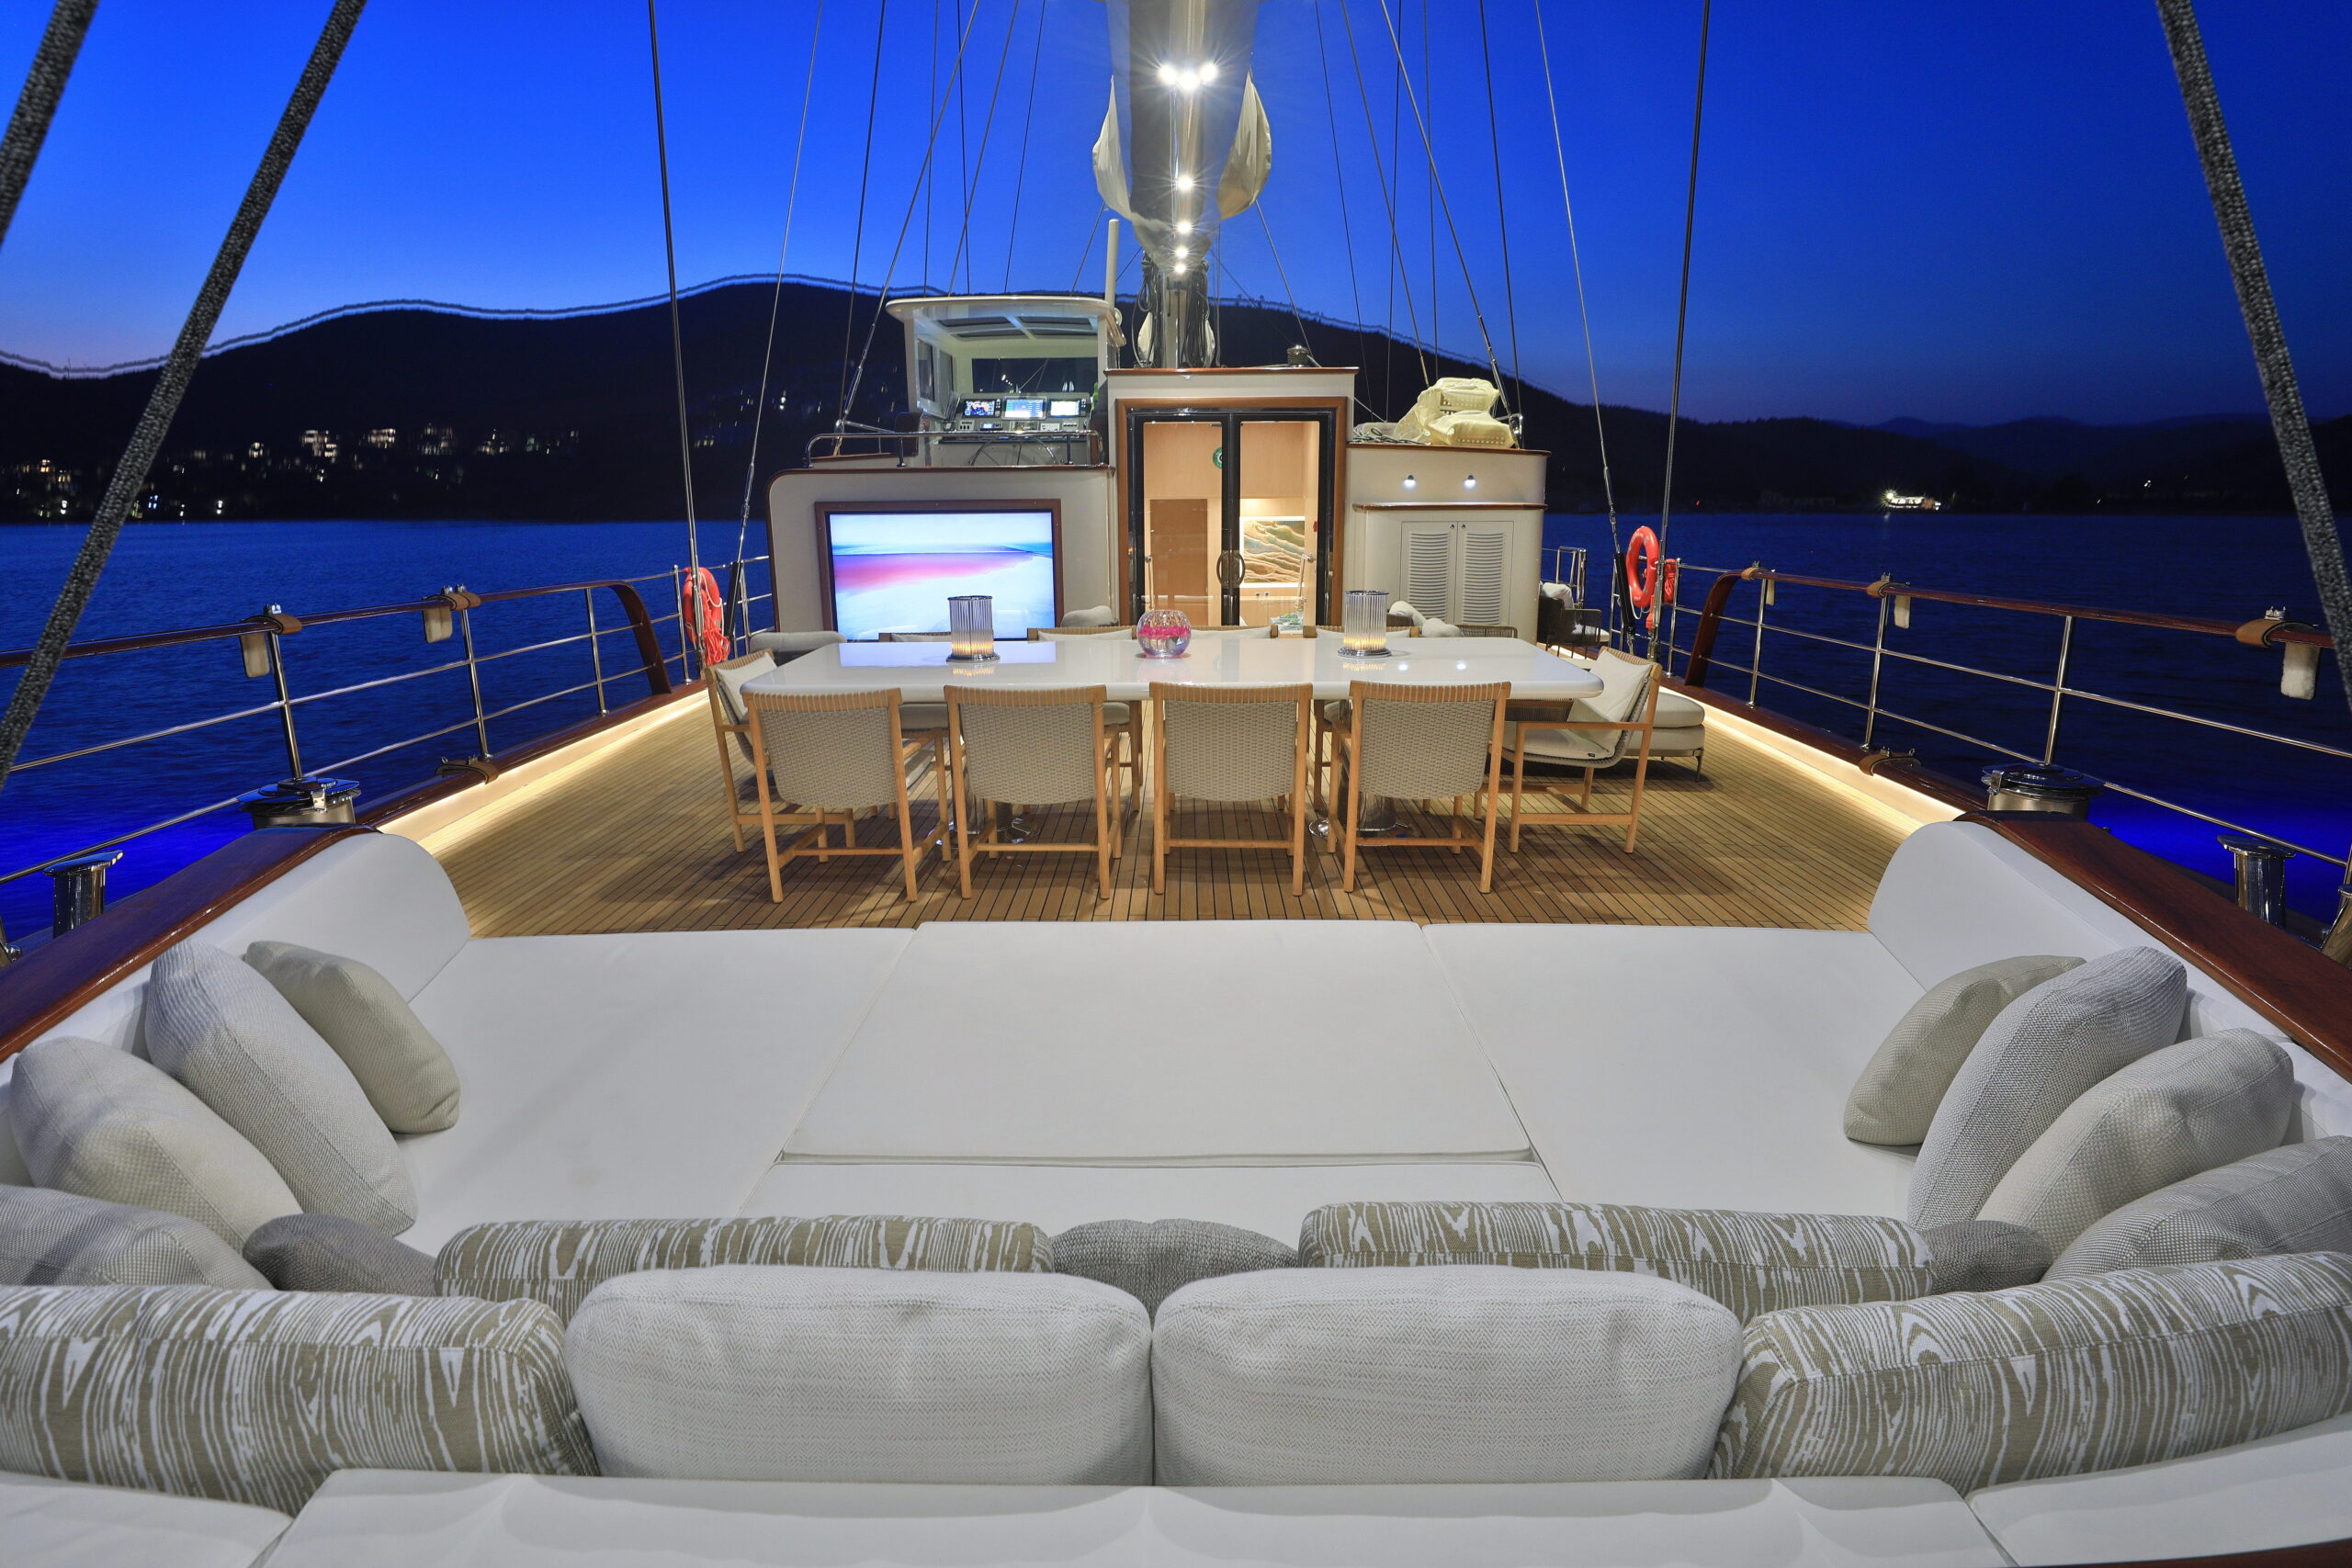 Aegean Yacht